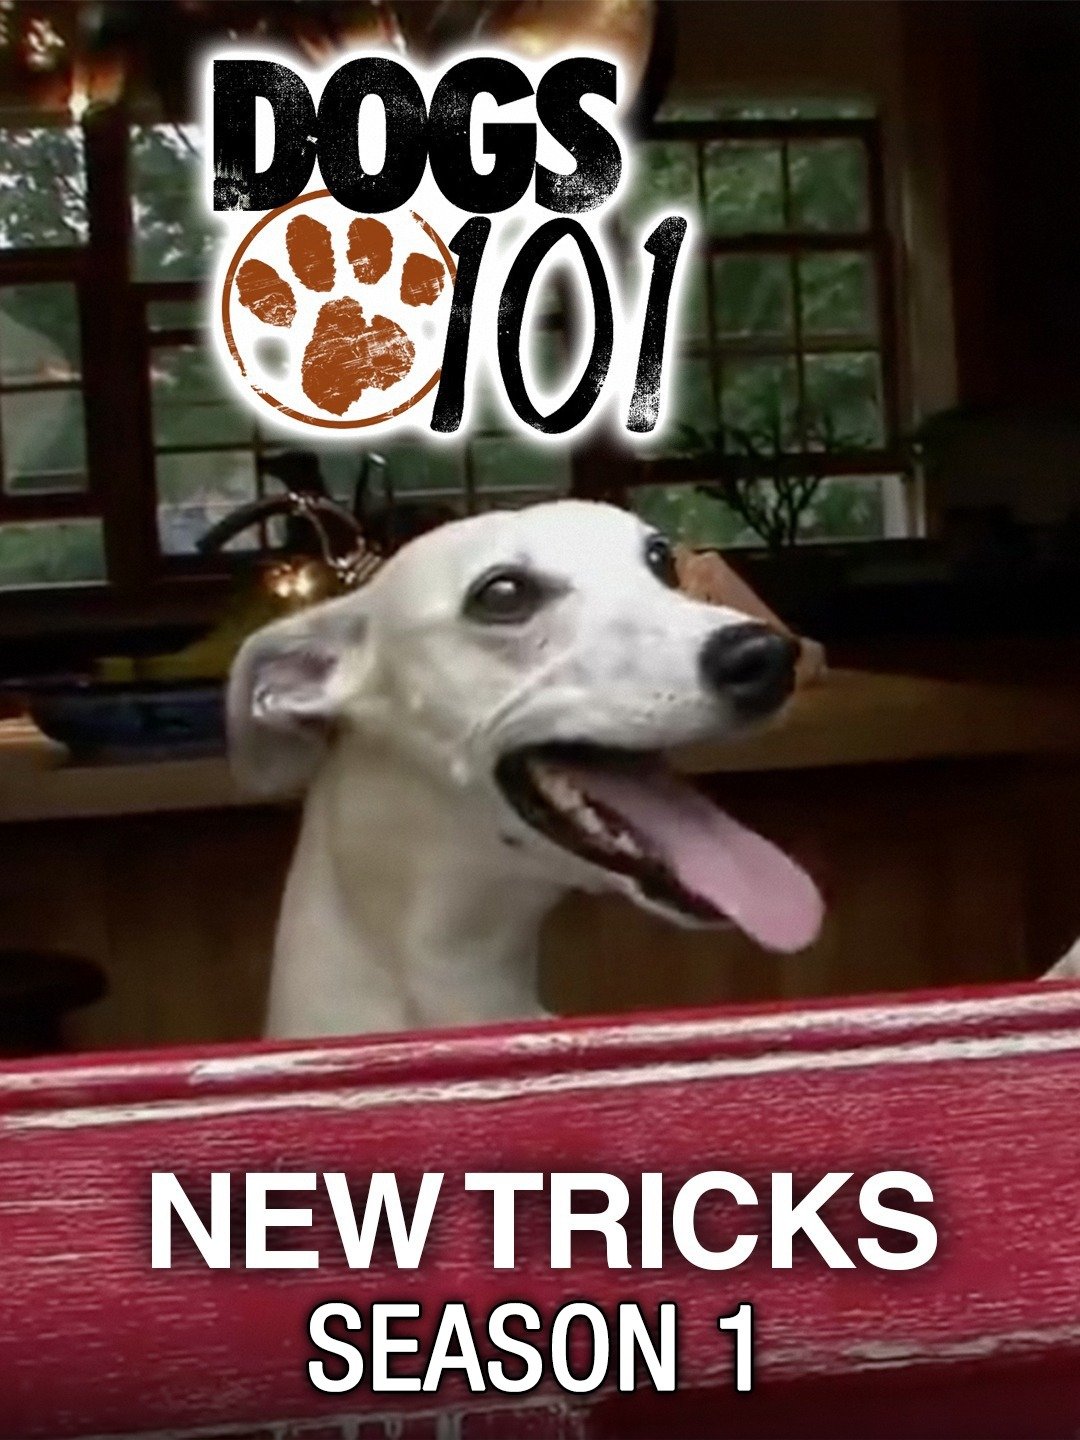 Dog new tricks